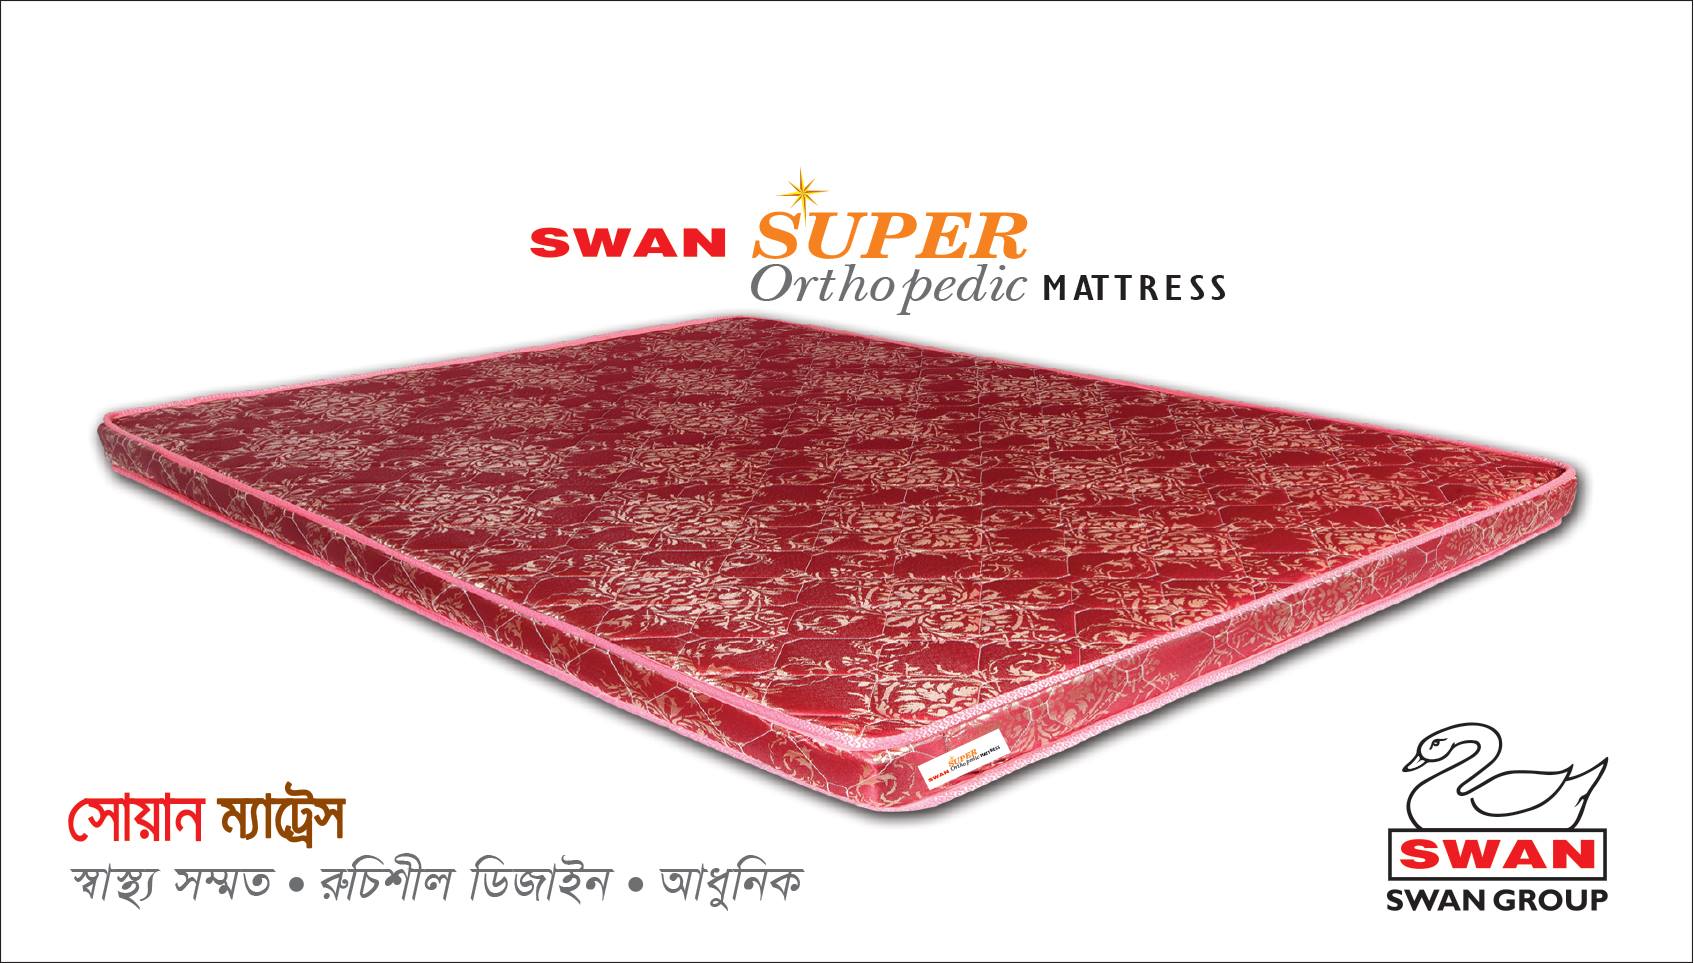 Swan Super Orthopedic Mattress